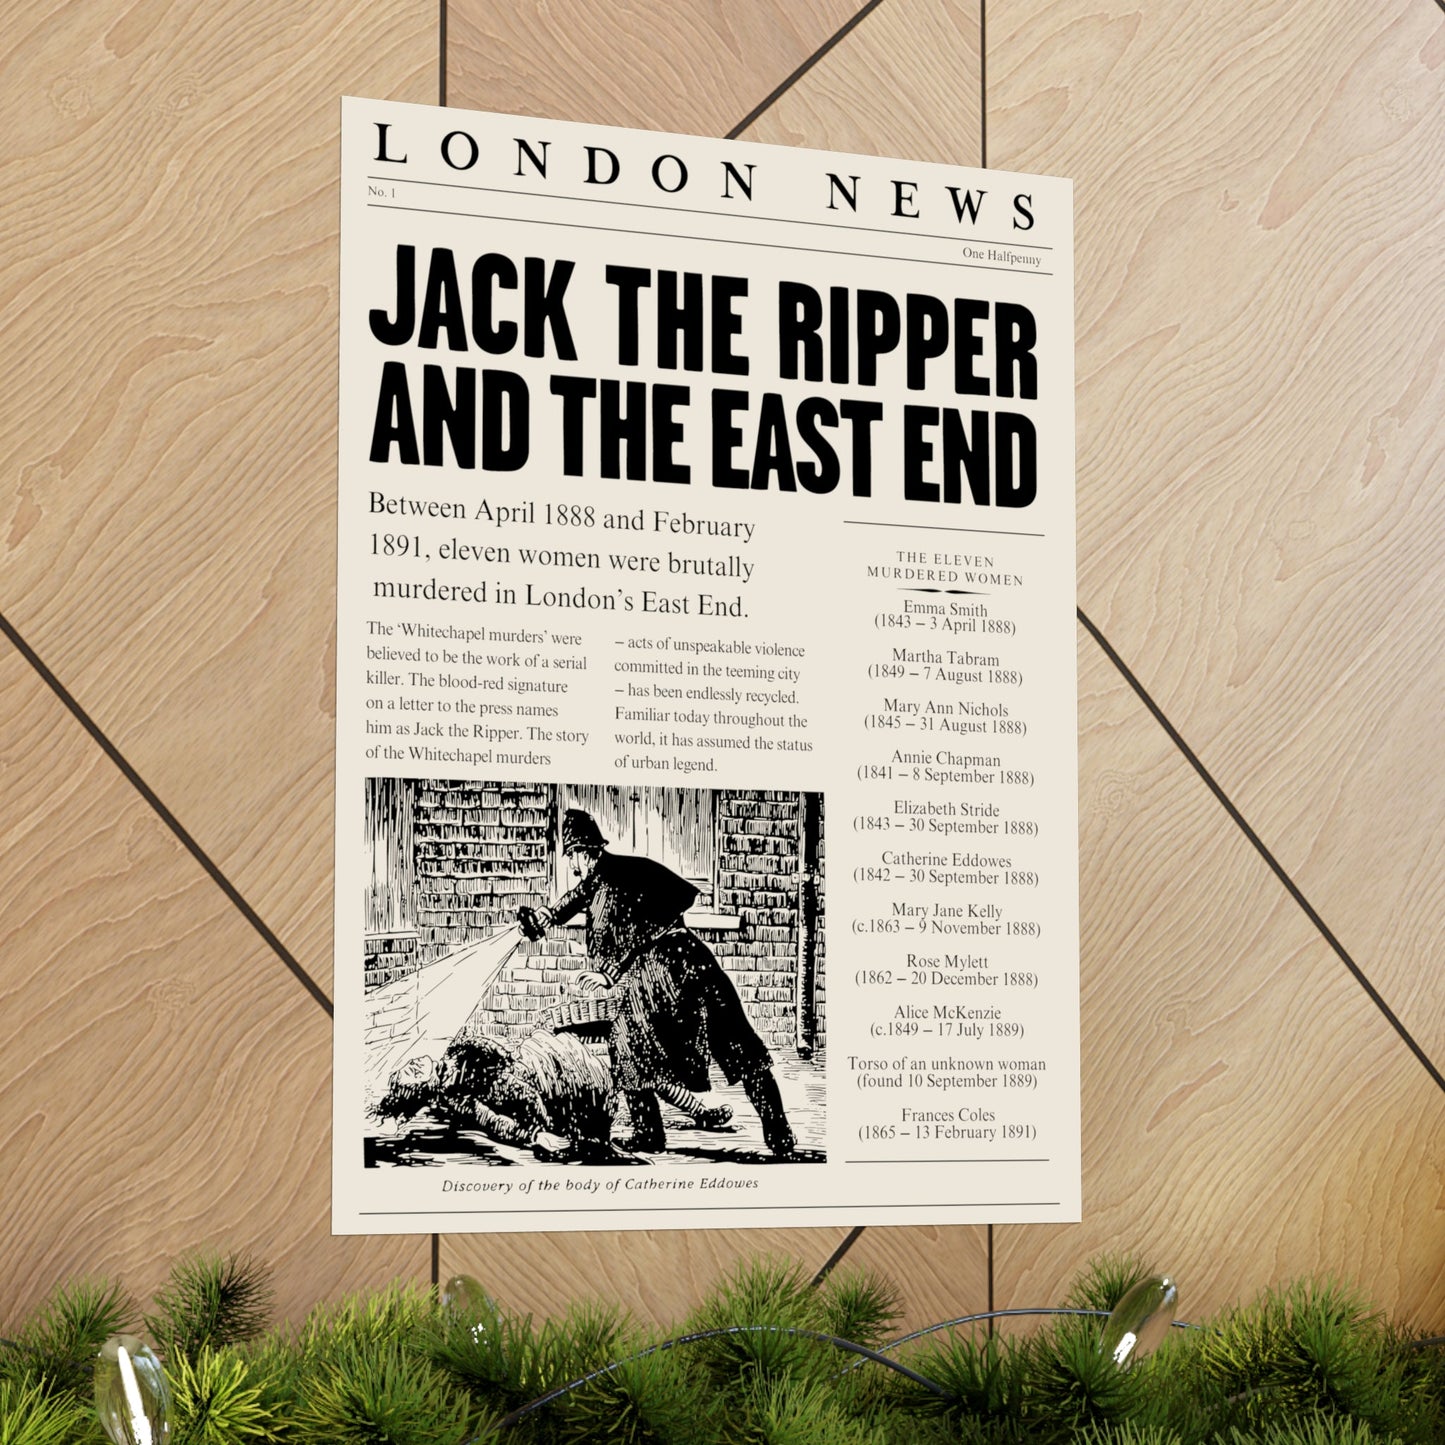 Jack the Ripper Vintage Newspaper Art Print - Black Mass Apparel - Poster